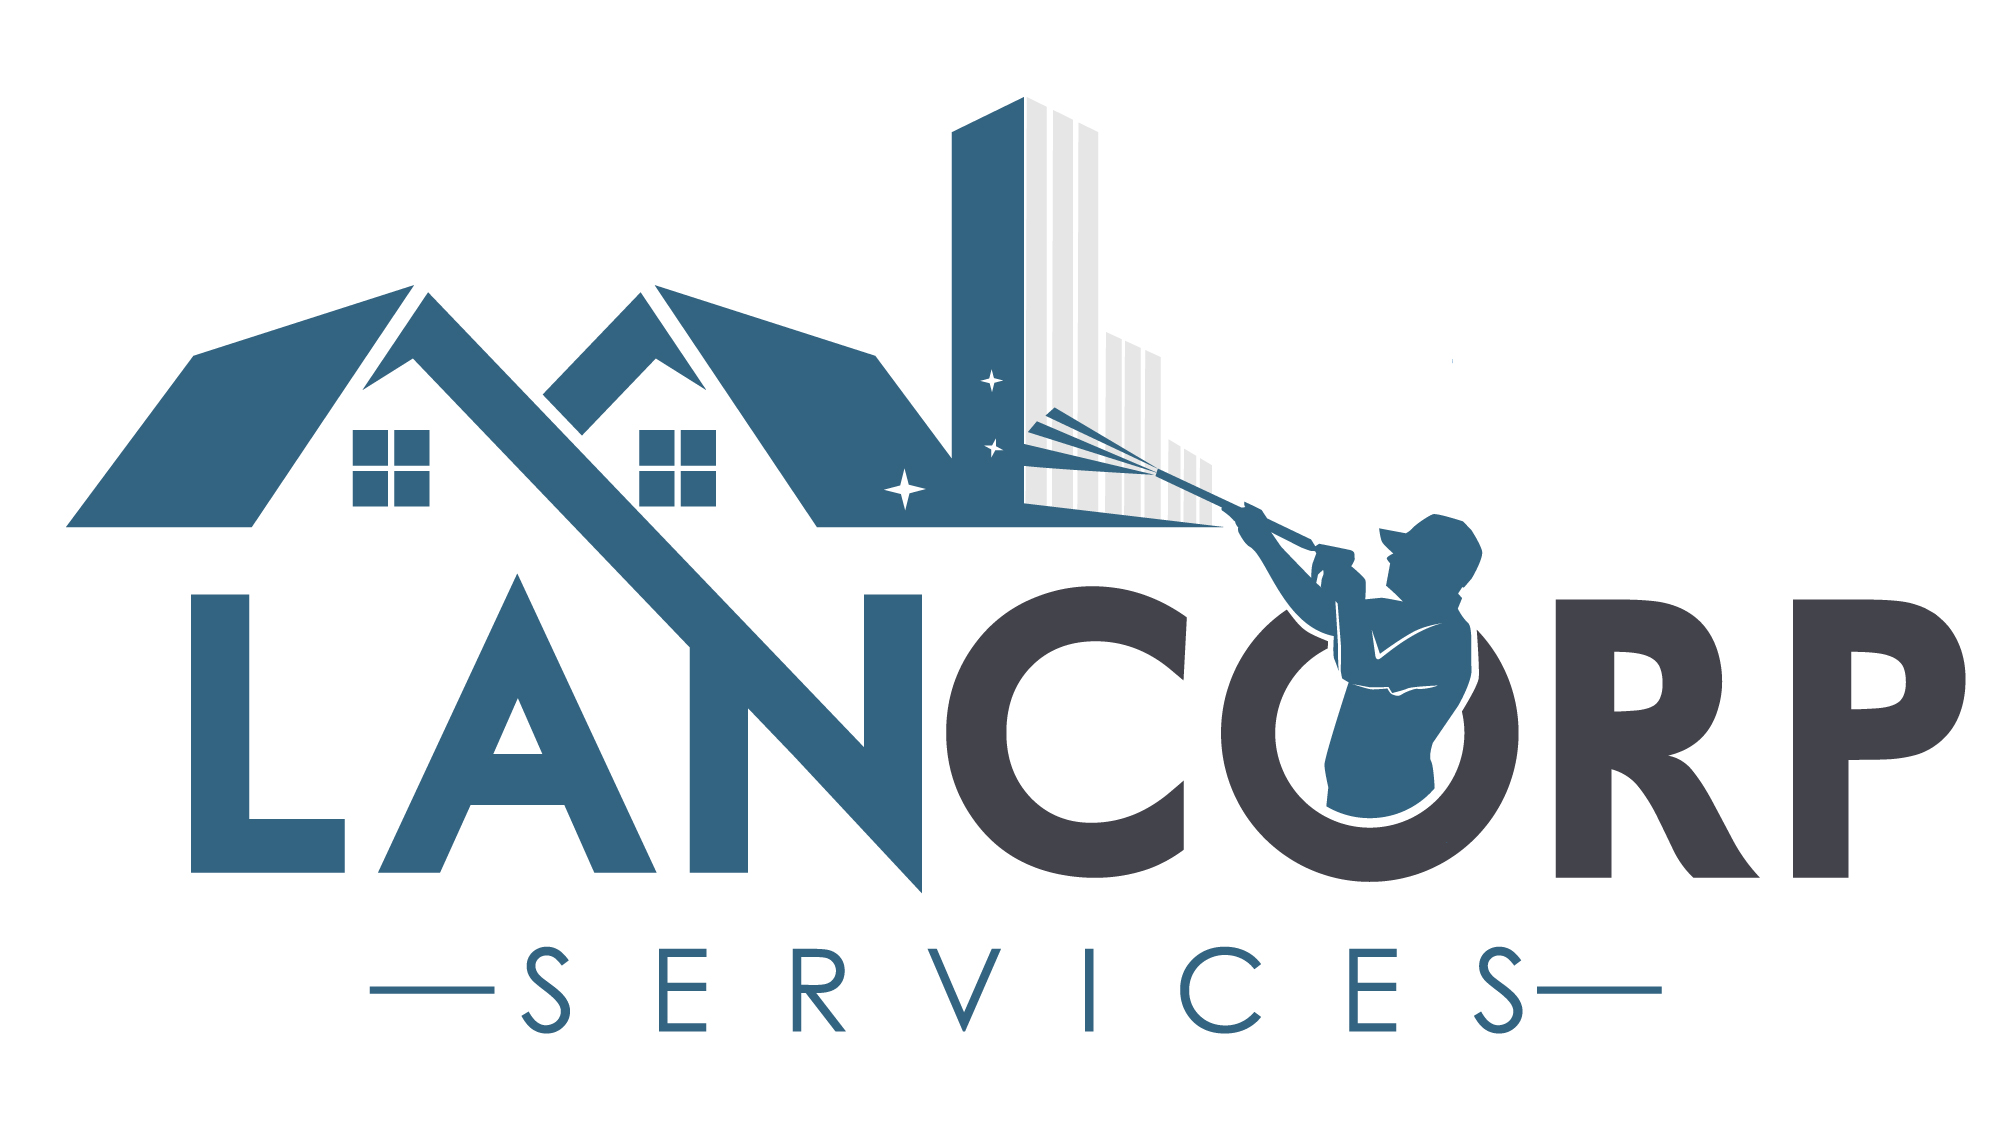 Lancorp Services Logo